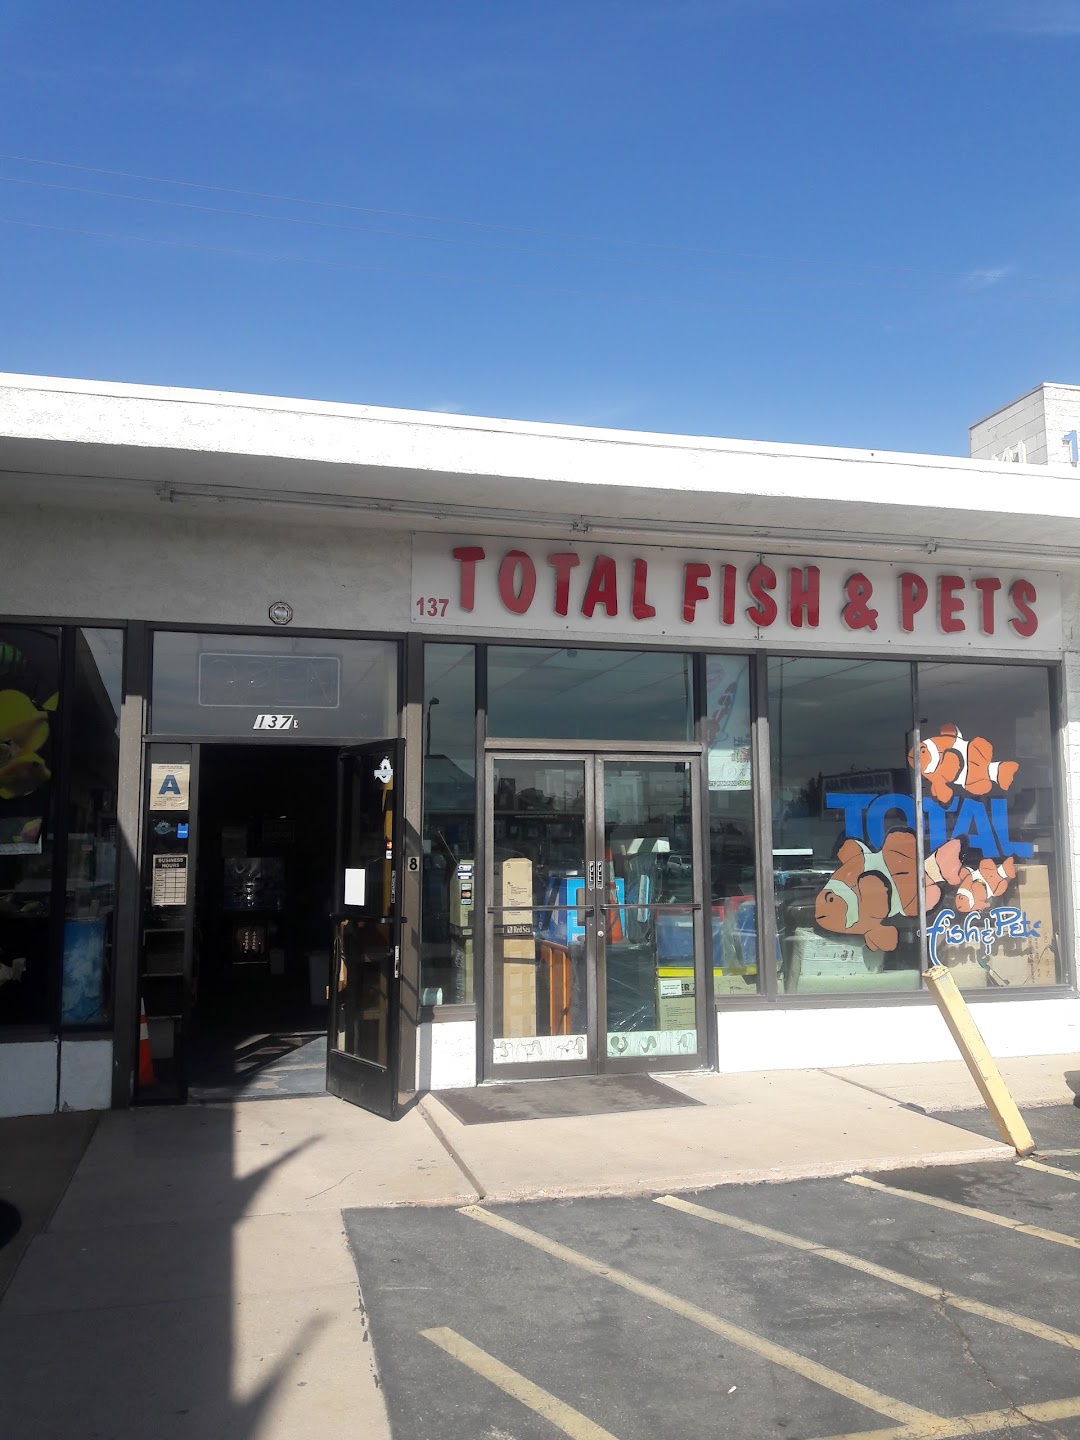 Total Fish & Pets